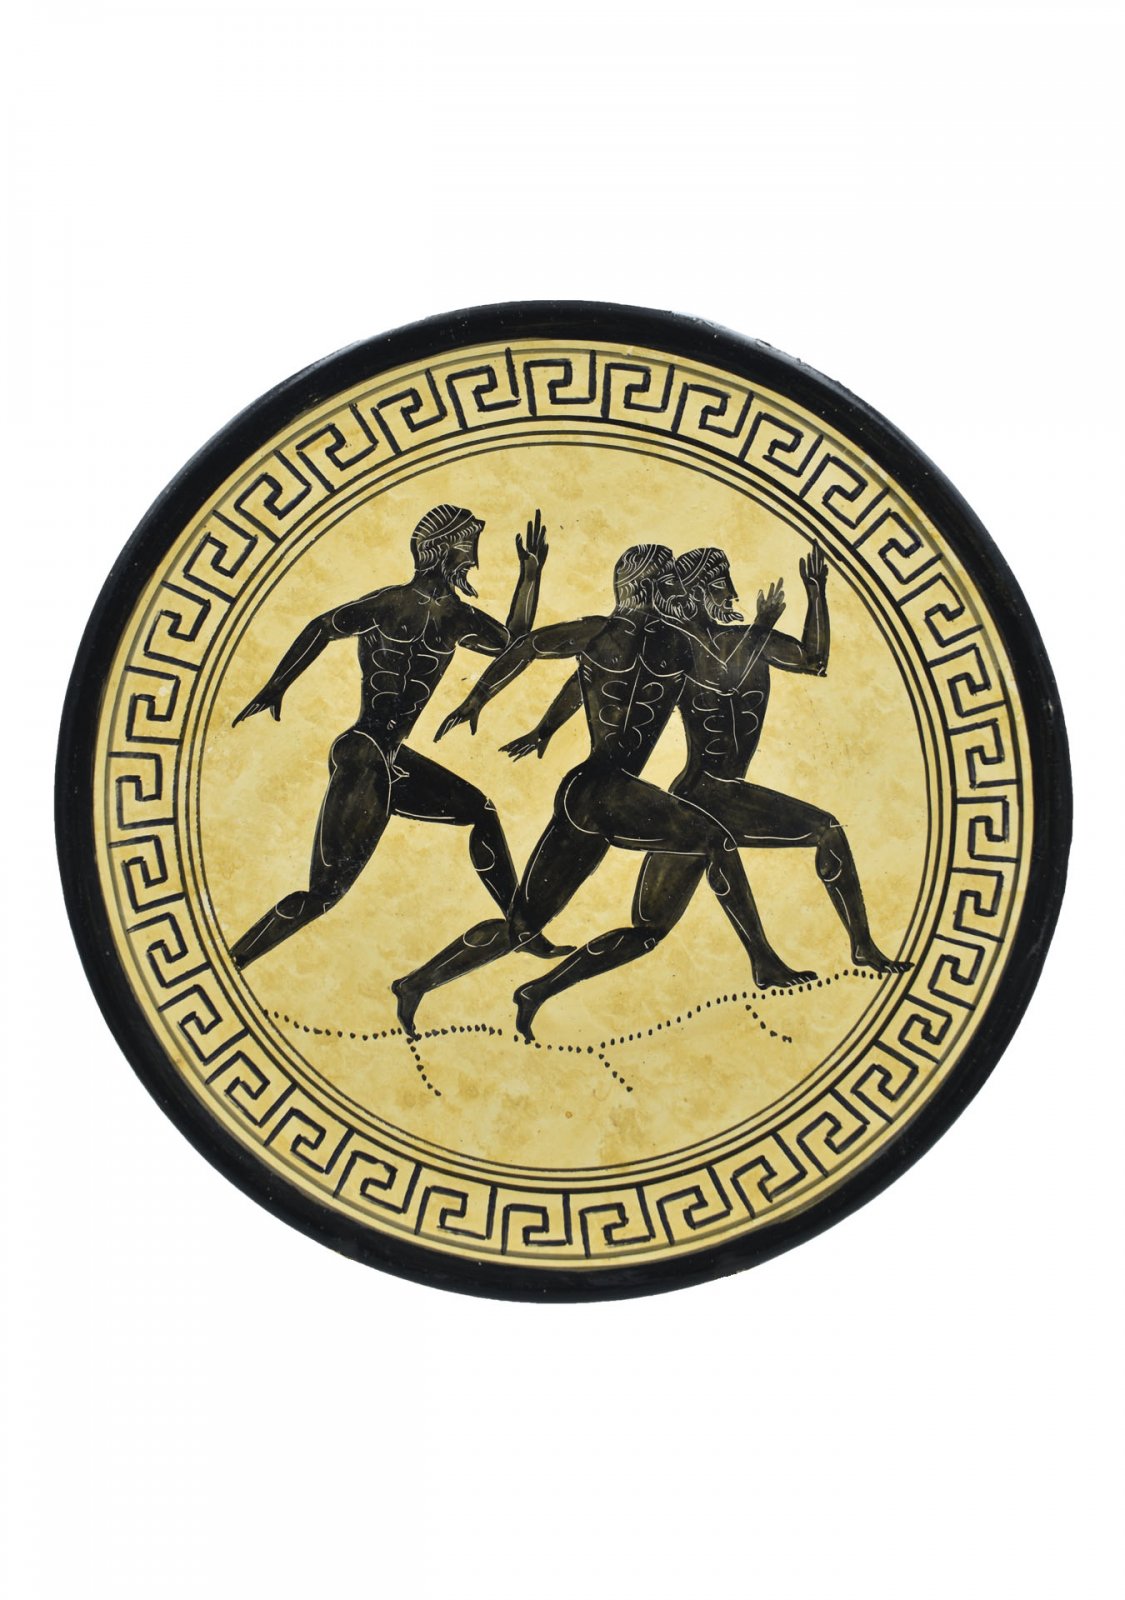 Greek ceramic plate depicting Marathon Runners